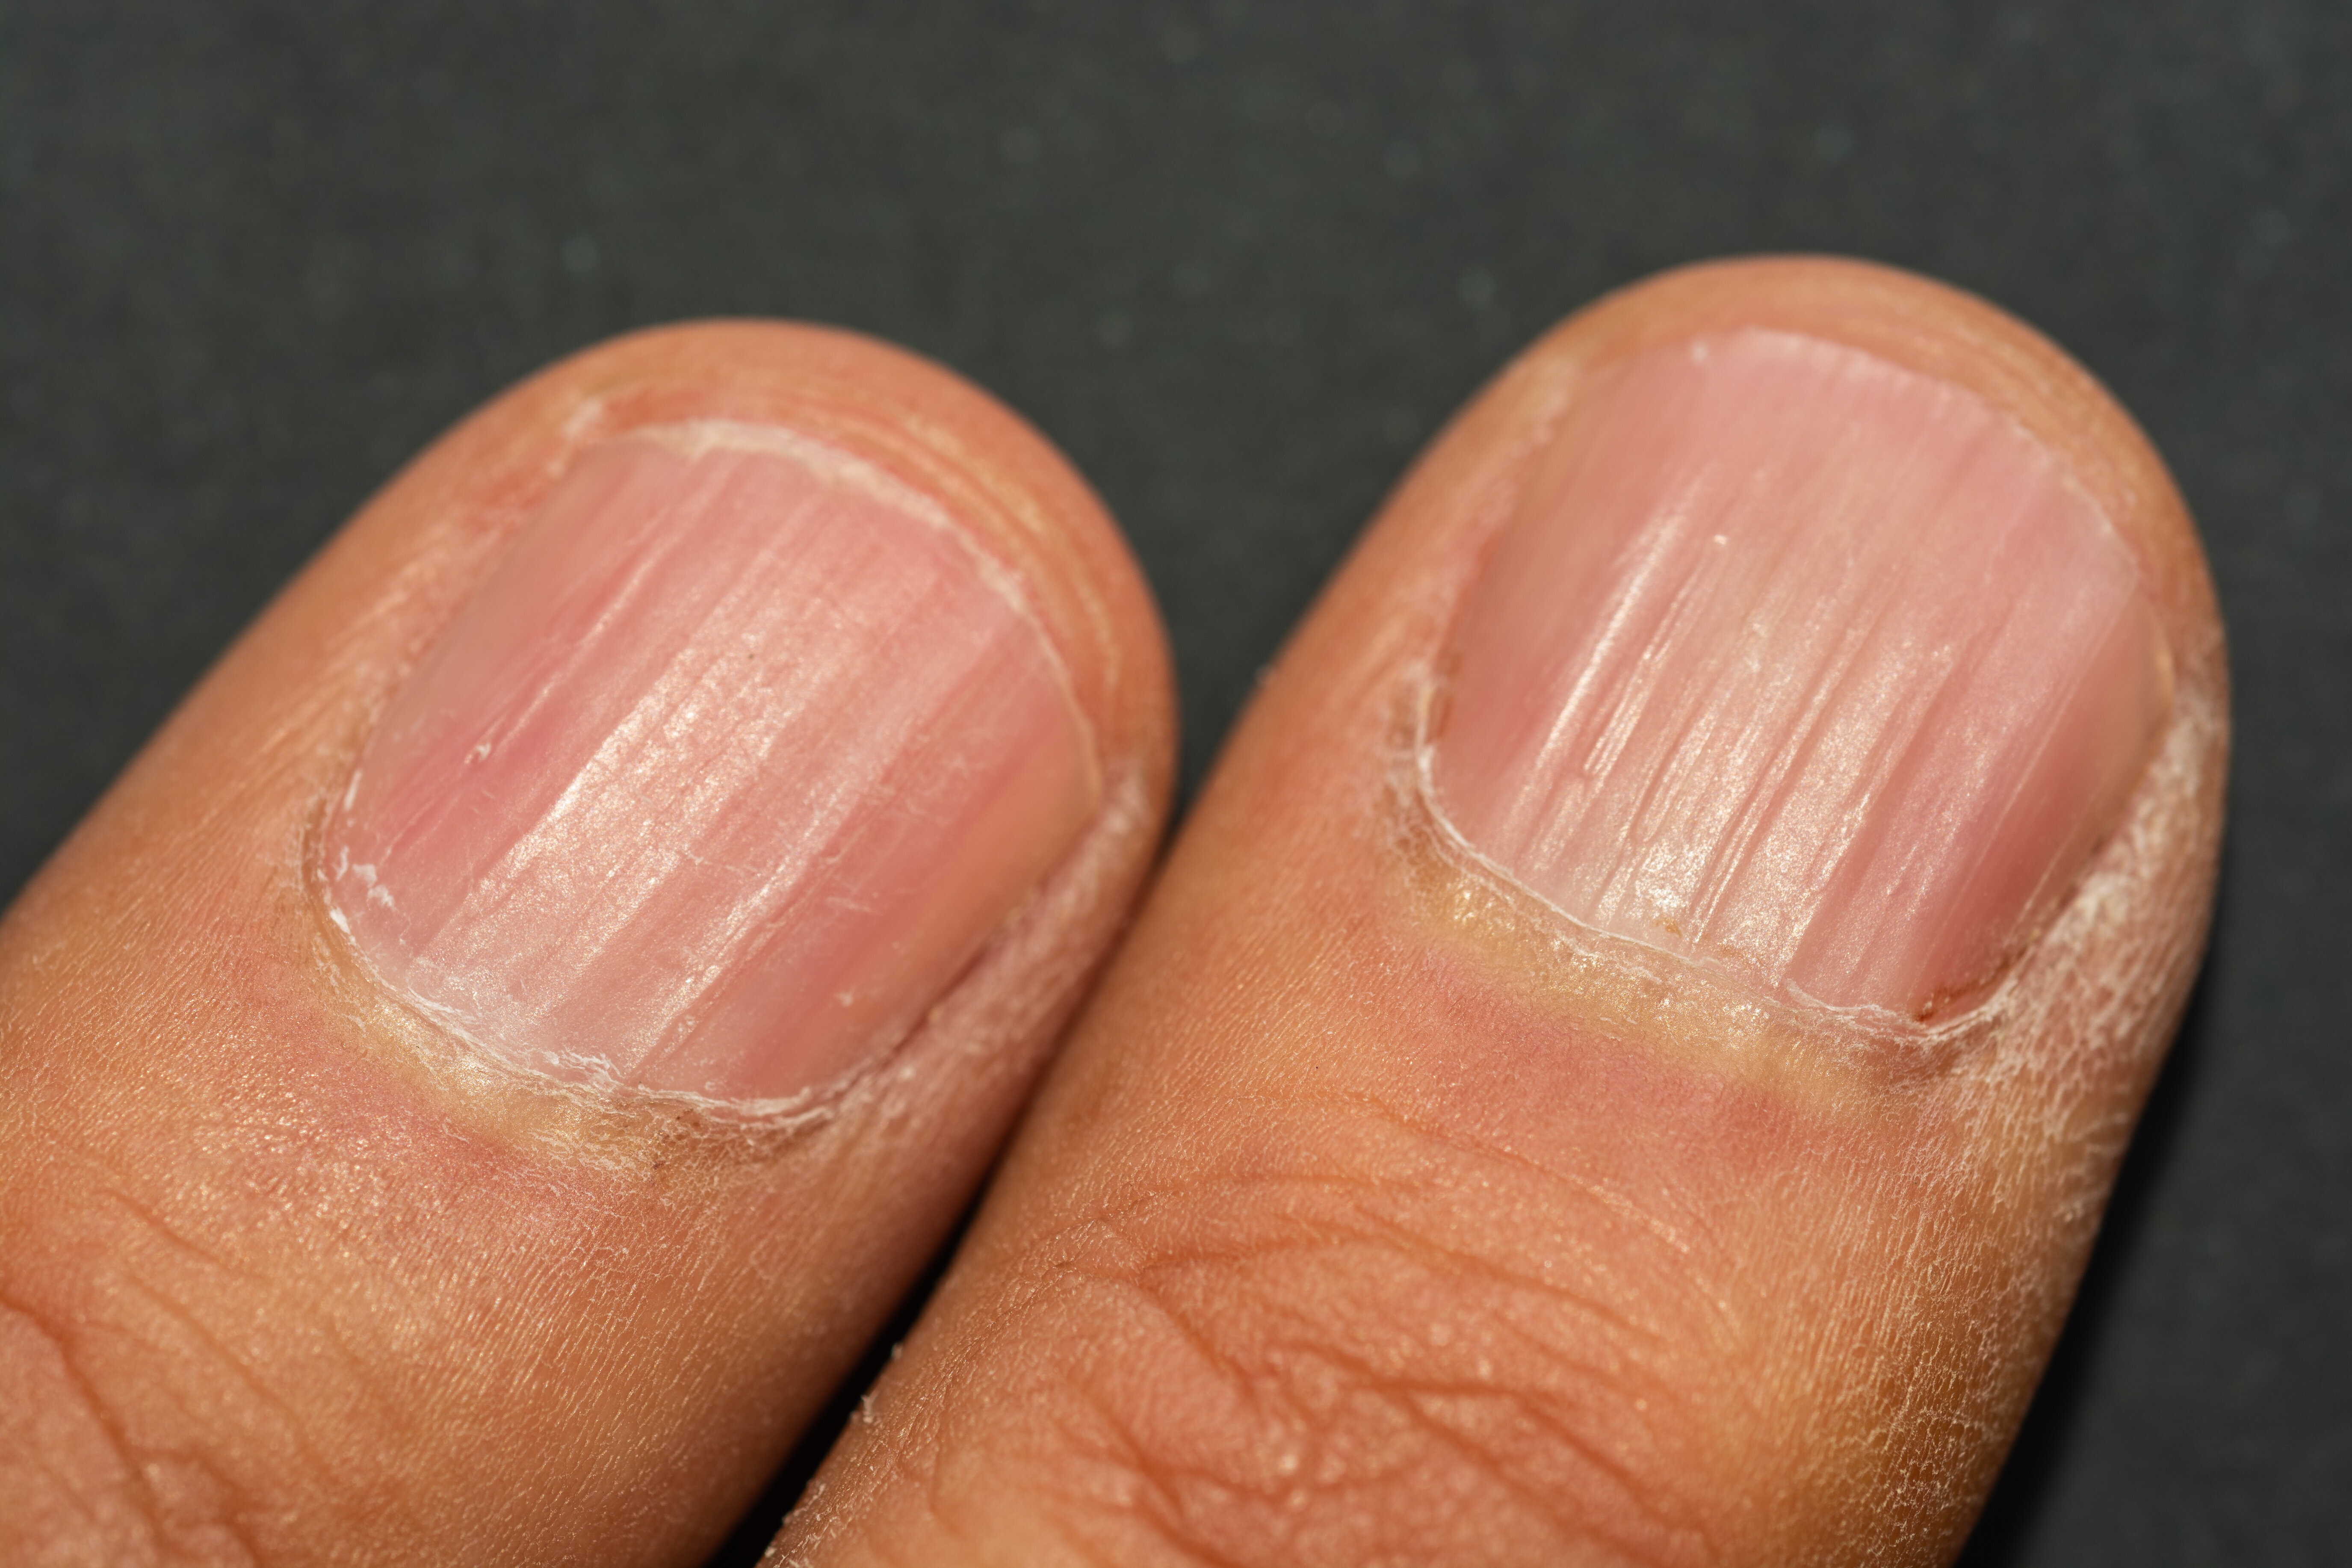 Vertical Ridges in Fingernails - Nail ridges: causes, aging & health! |  Fingernail health, Nail health, Body health